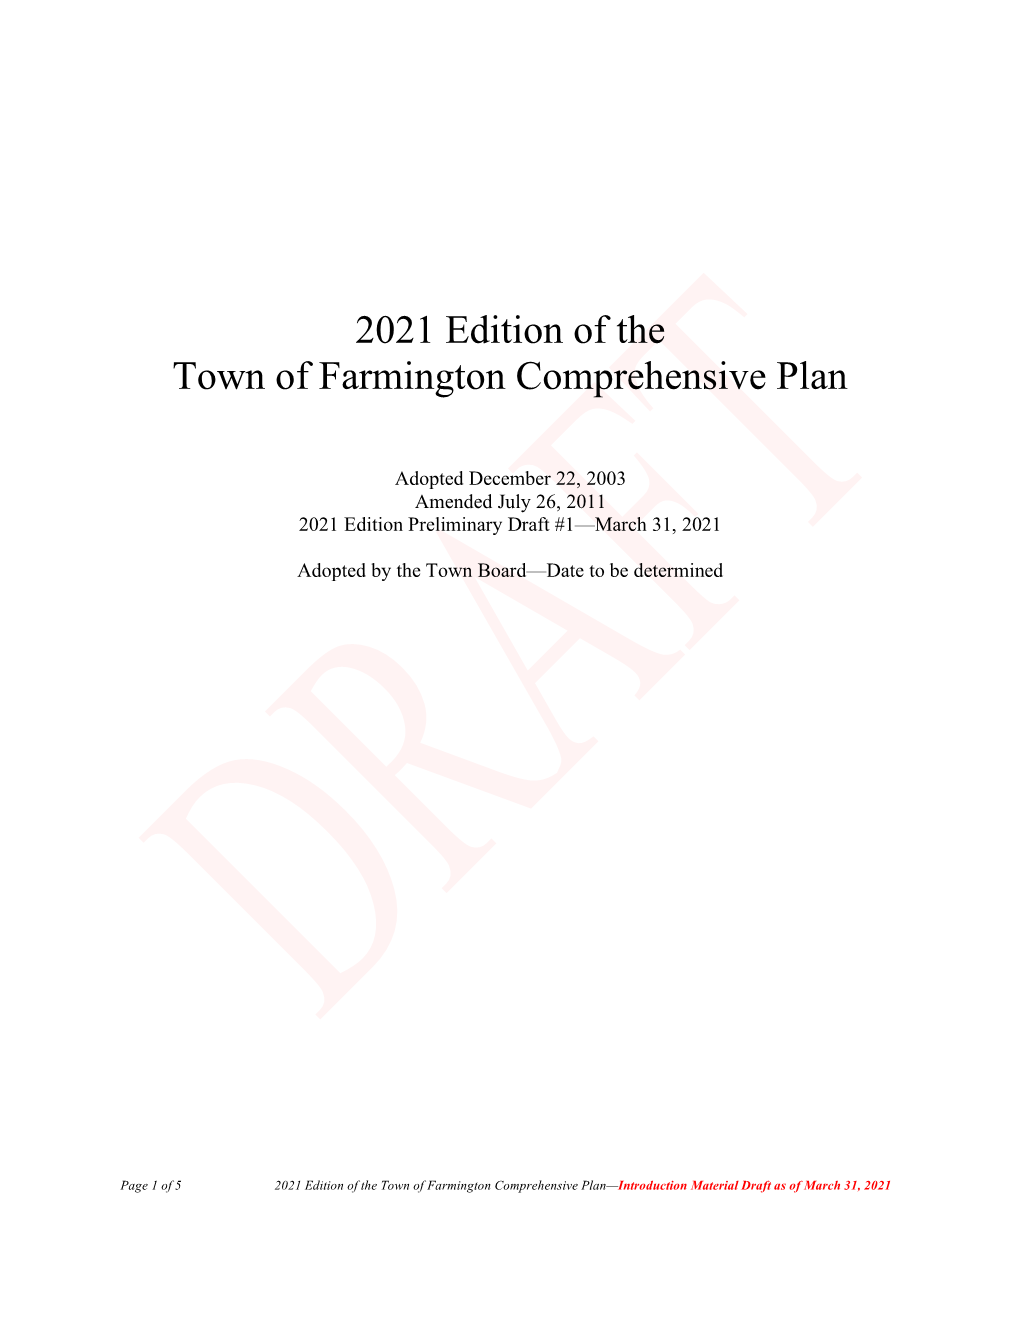 2021 Edition of the Town of Farmington Comprehensive Plan